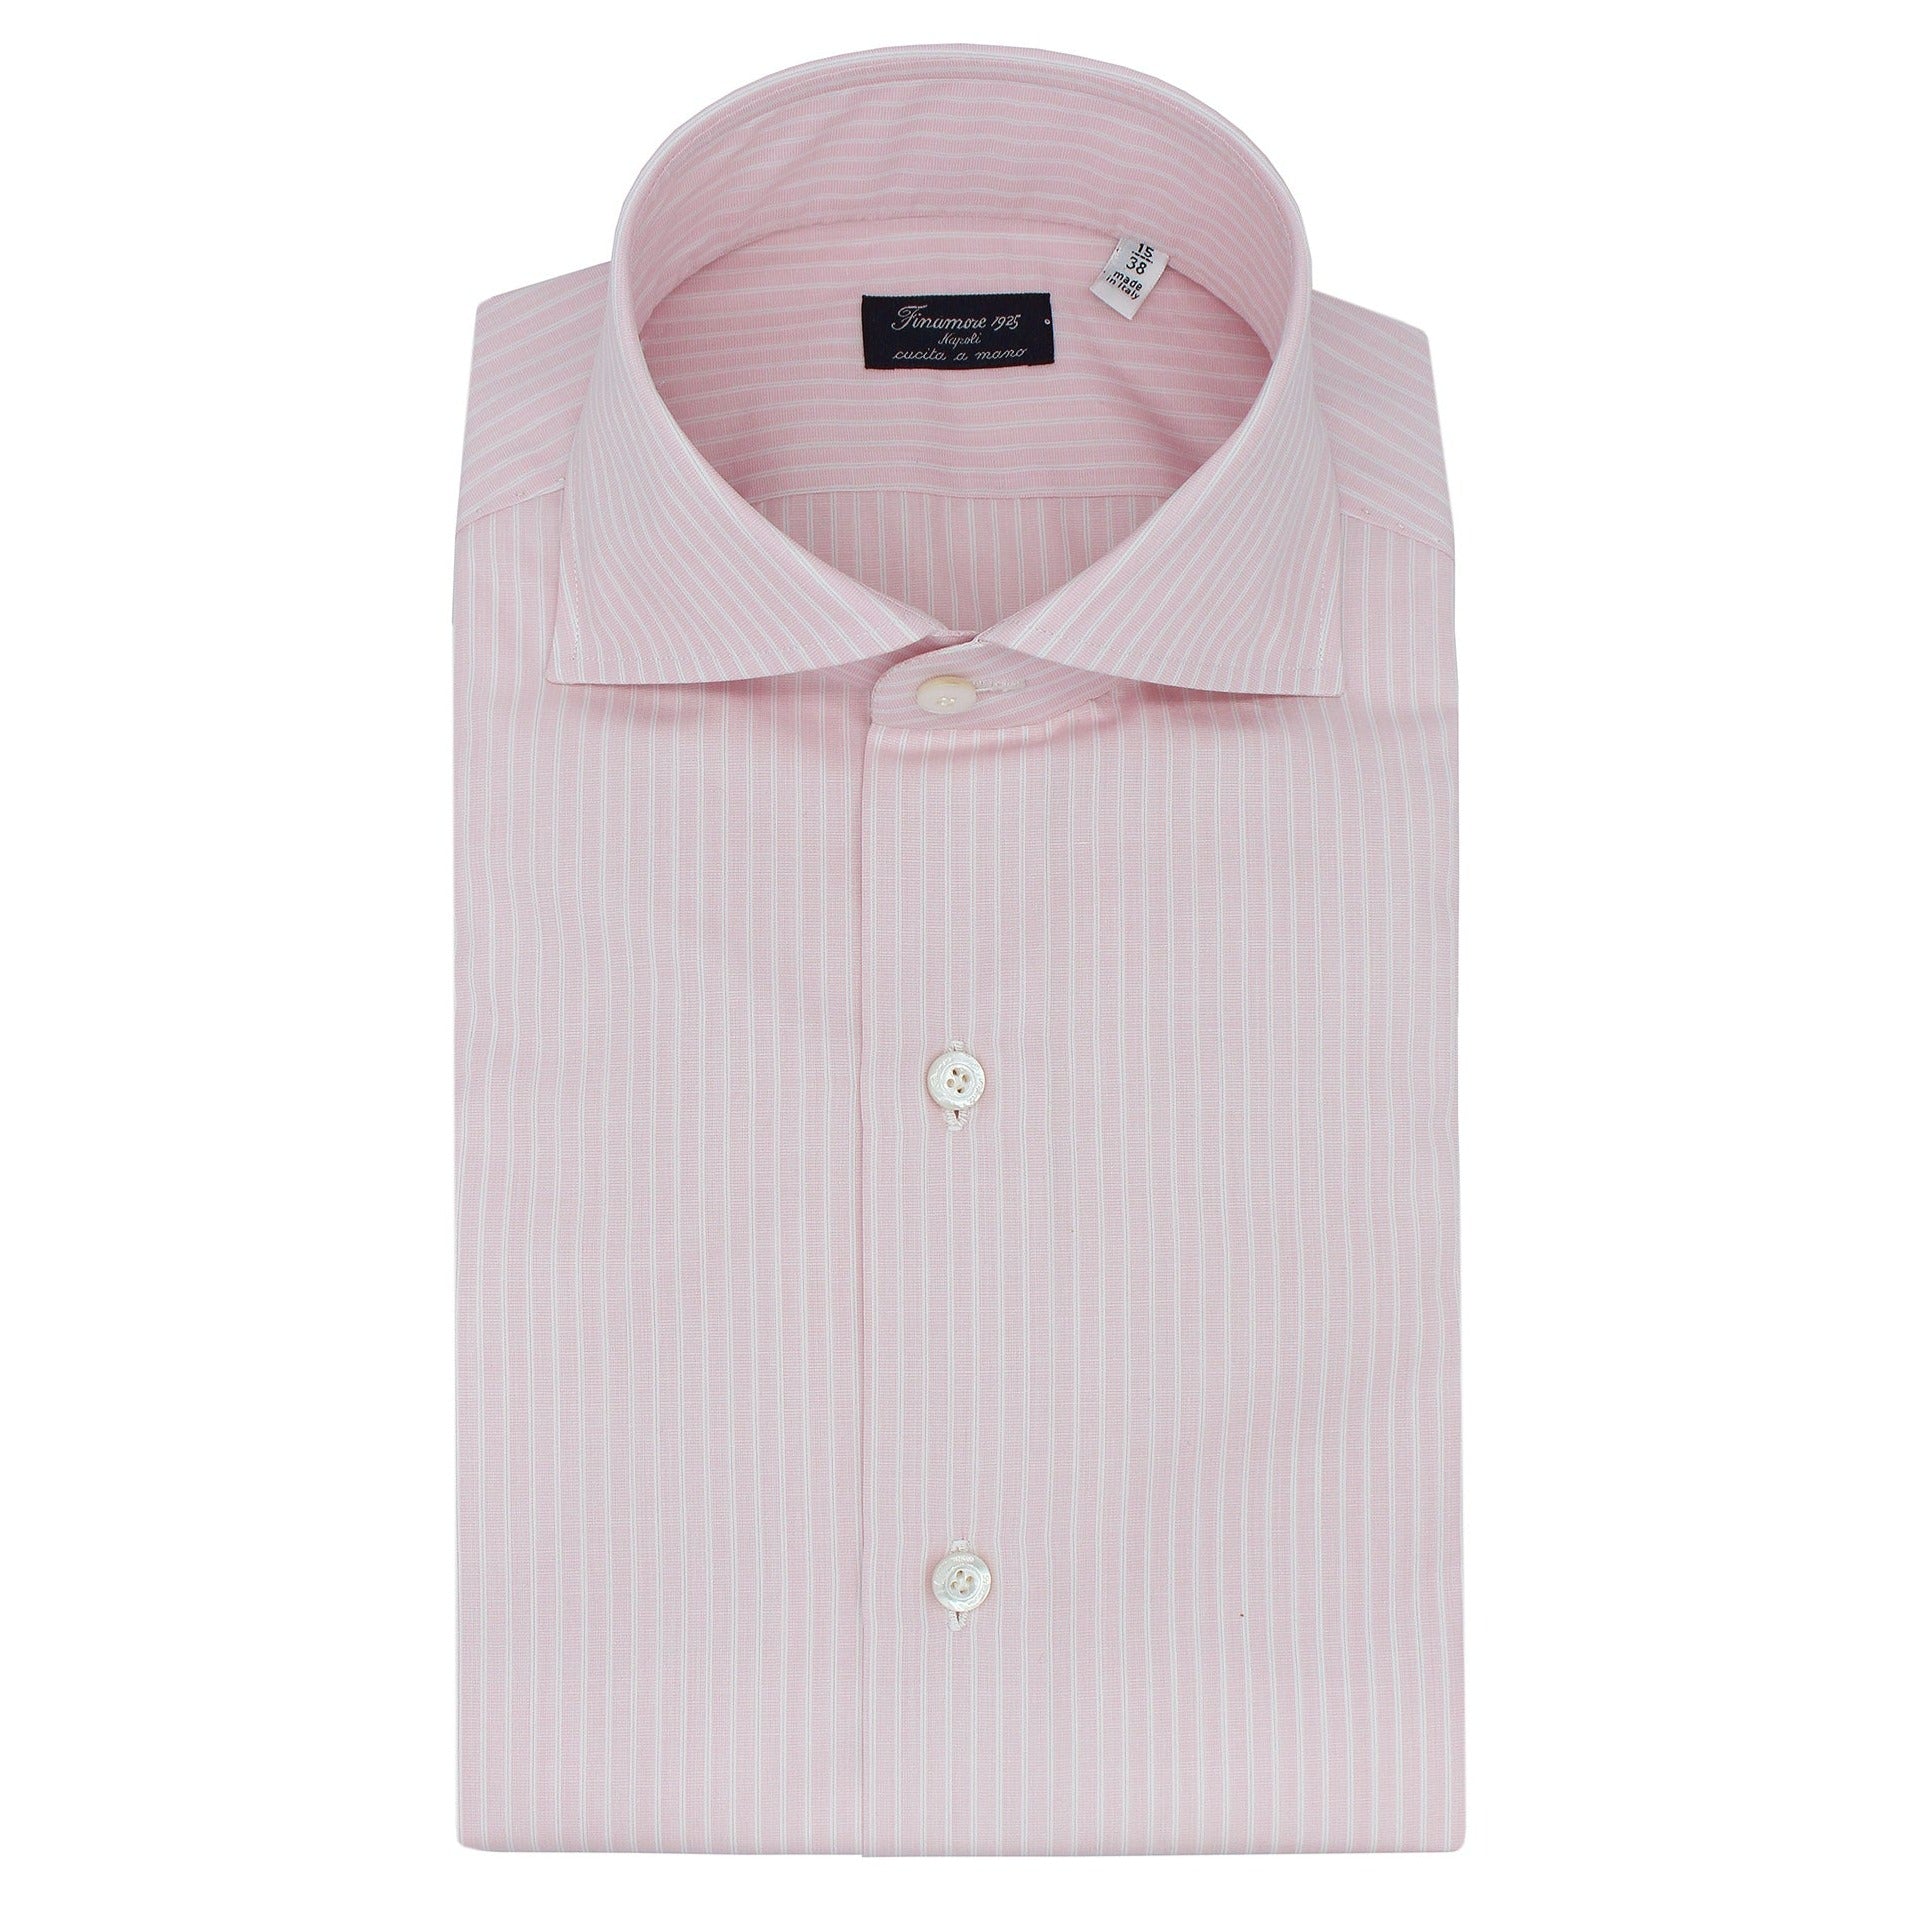 Classic fit Naples shirt pink bottom white stripe